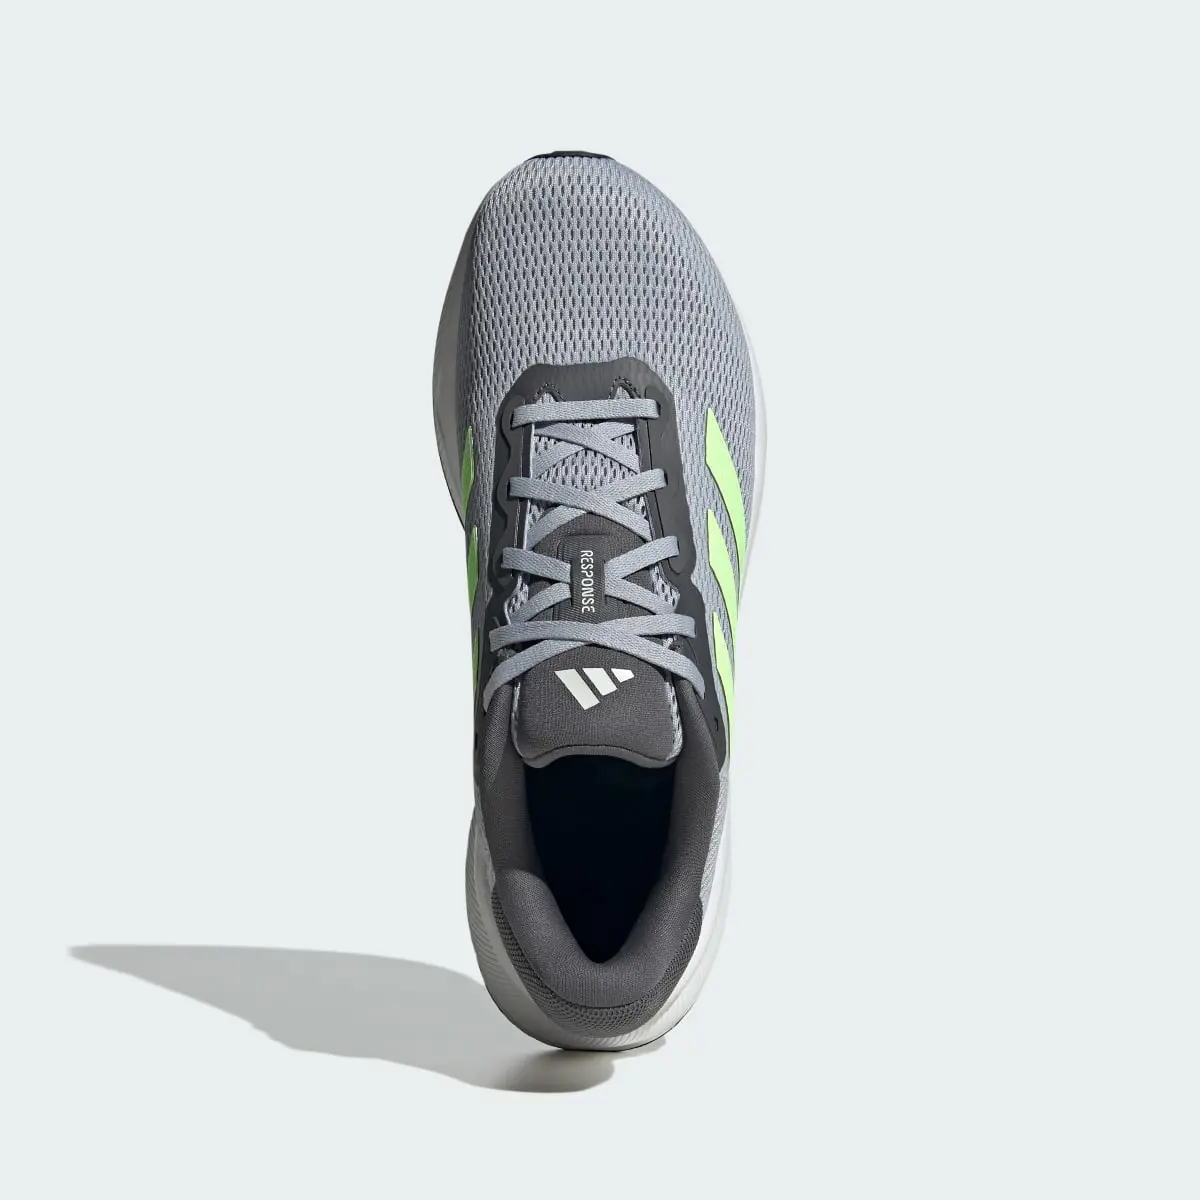 Adidas Response Ayakkabı. 3